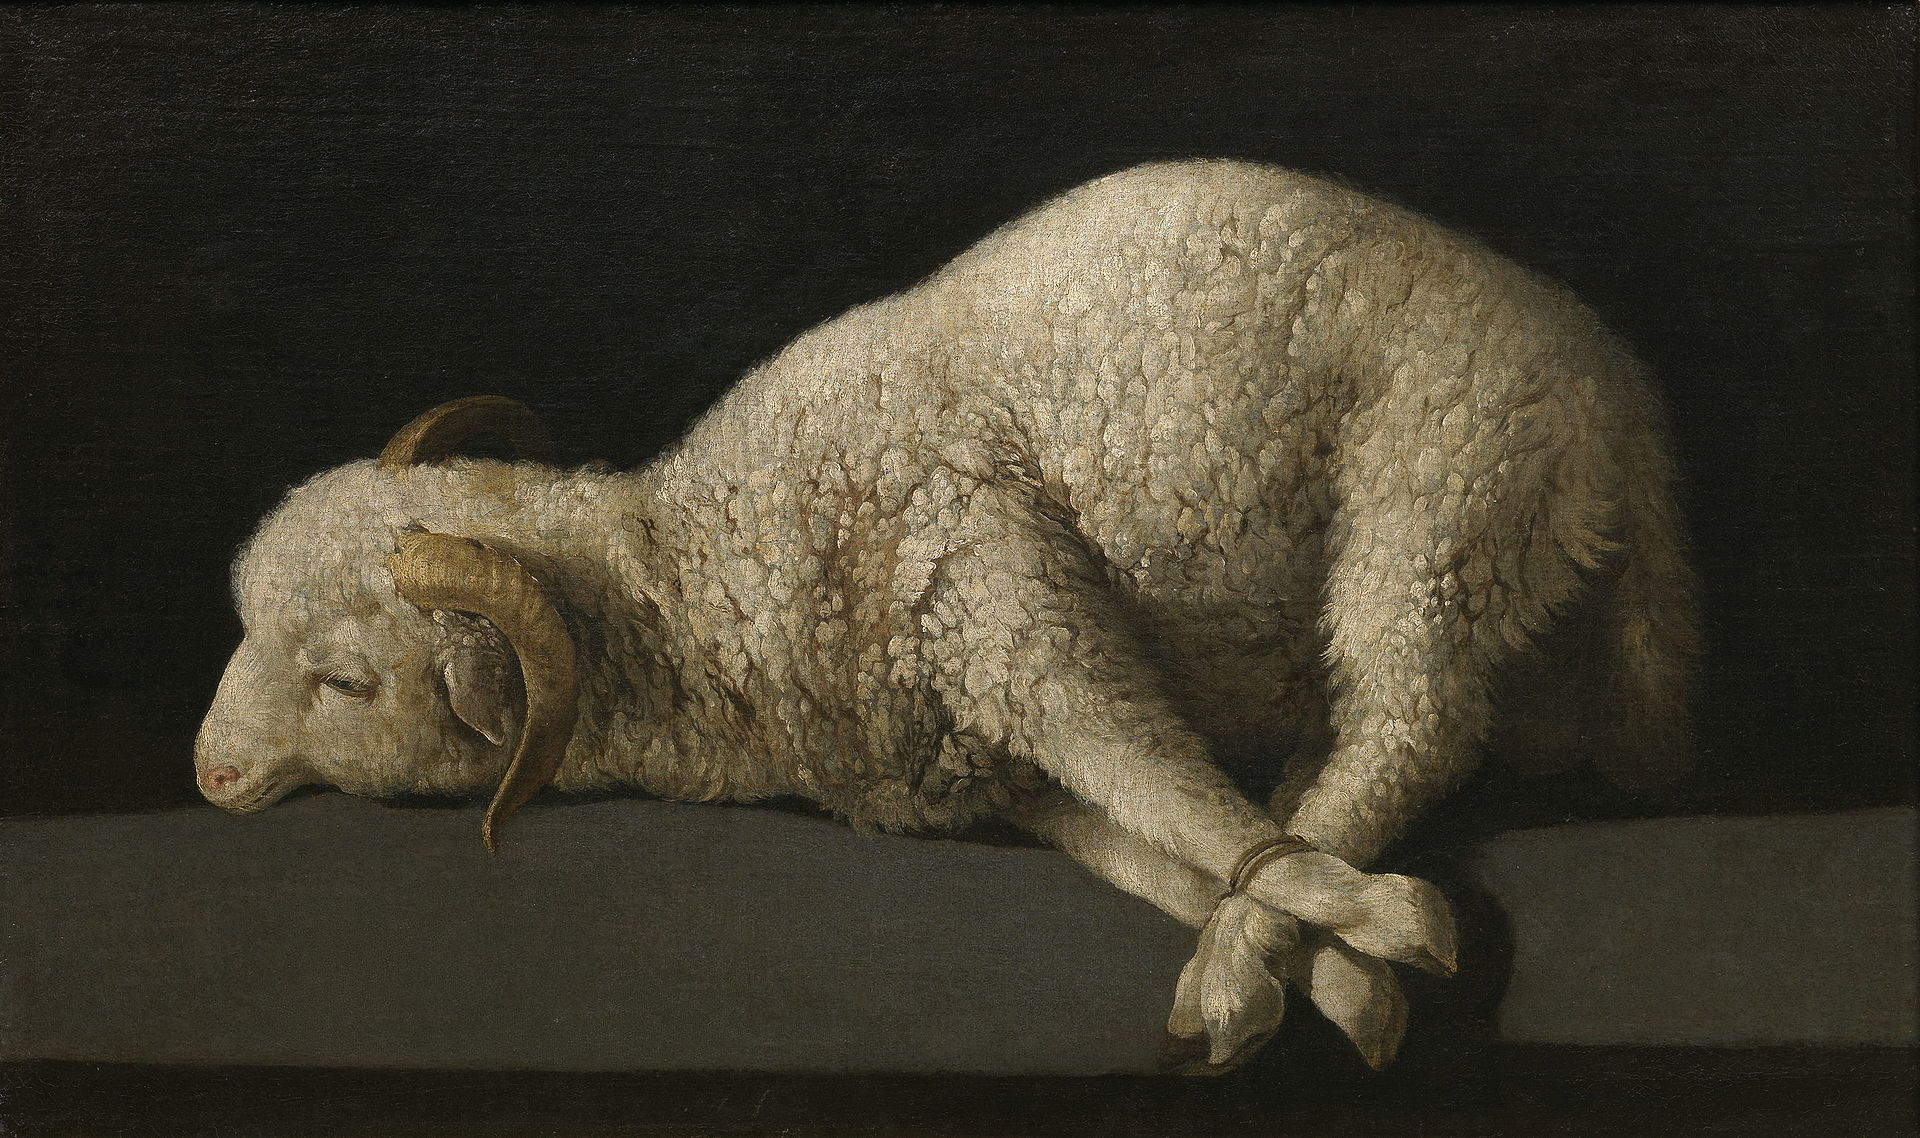 Lamb of God by Zurbaran pubic domain via Wikimedia Common s